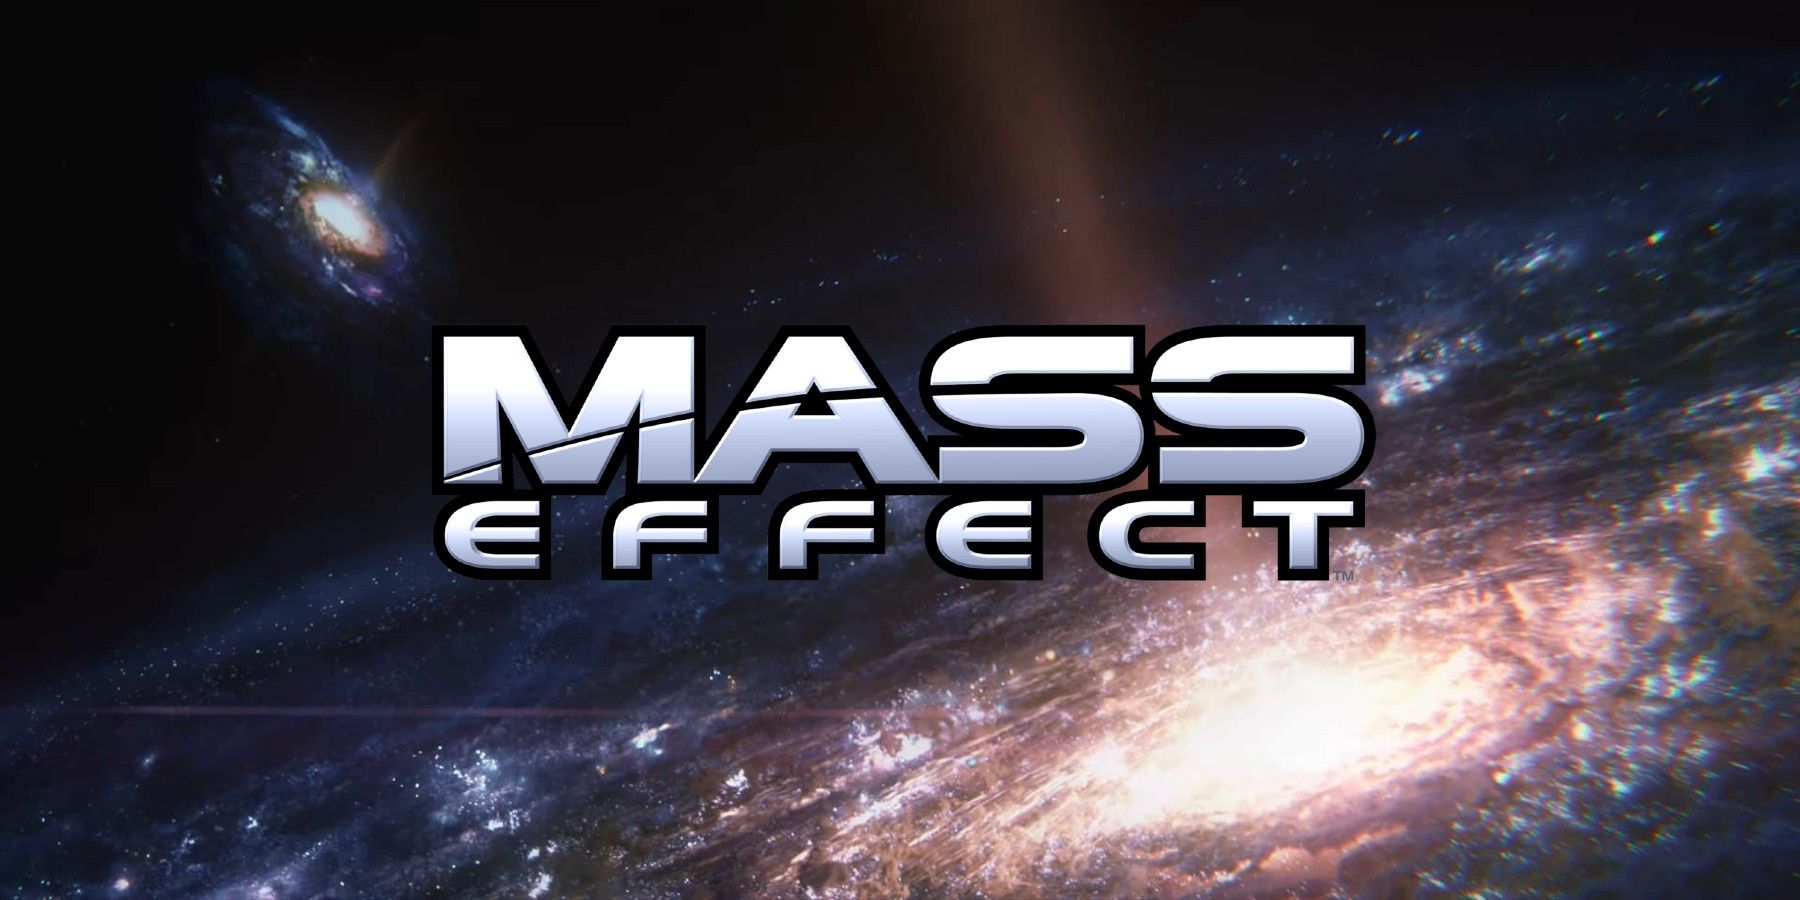 Mass Effect4：その二重銀河アプローチの長所と短所